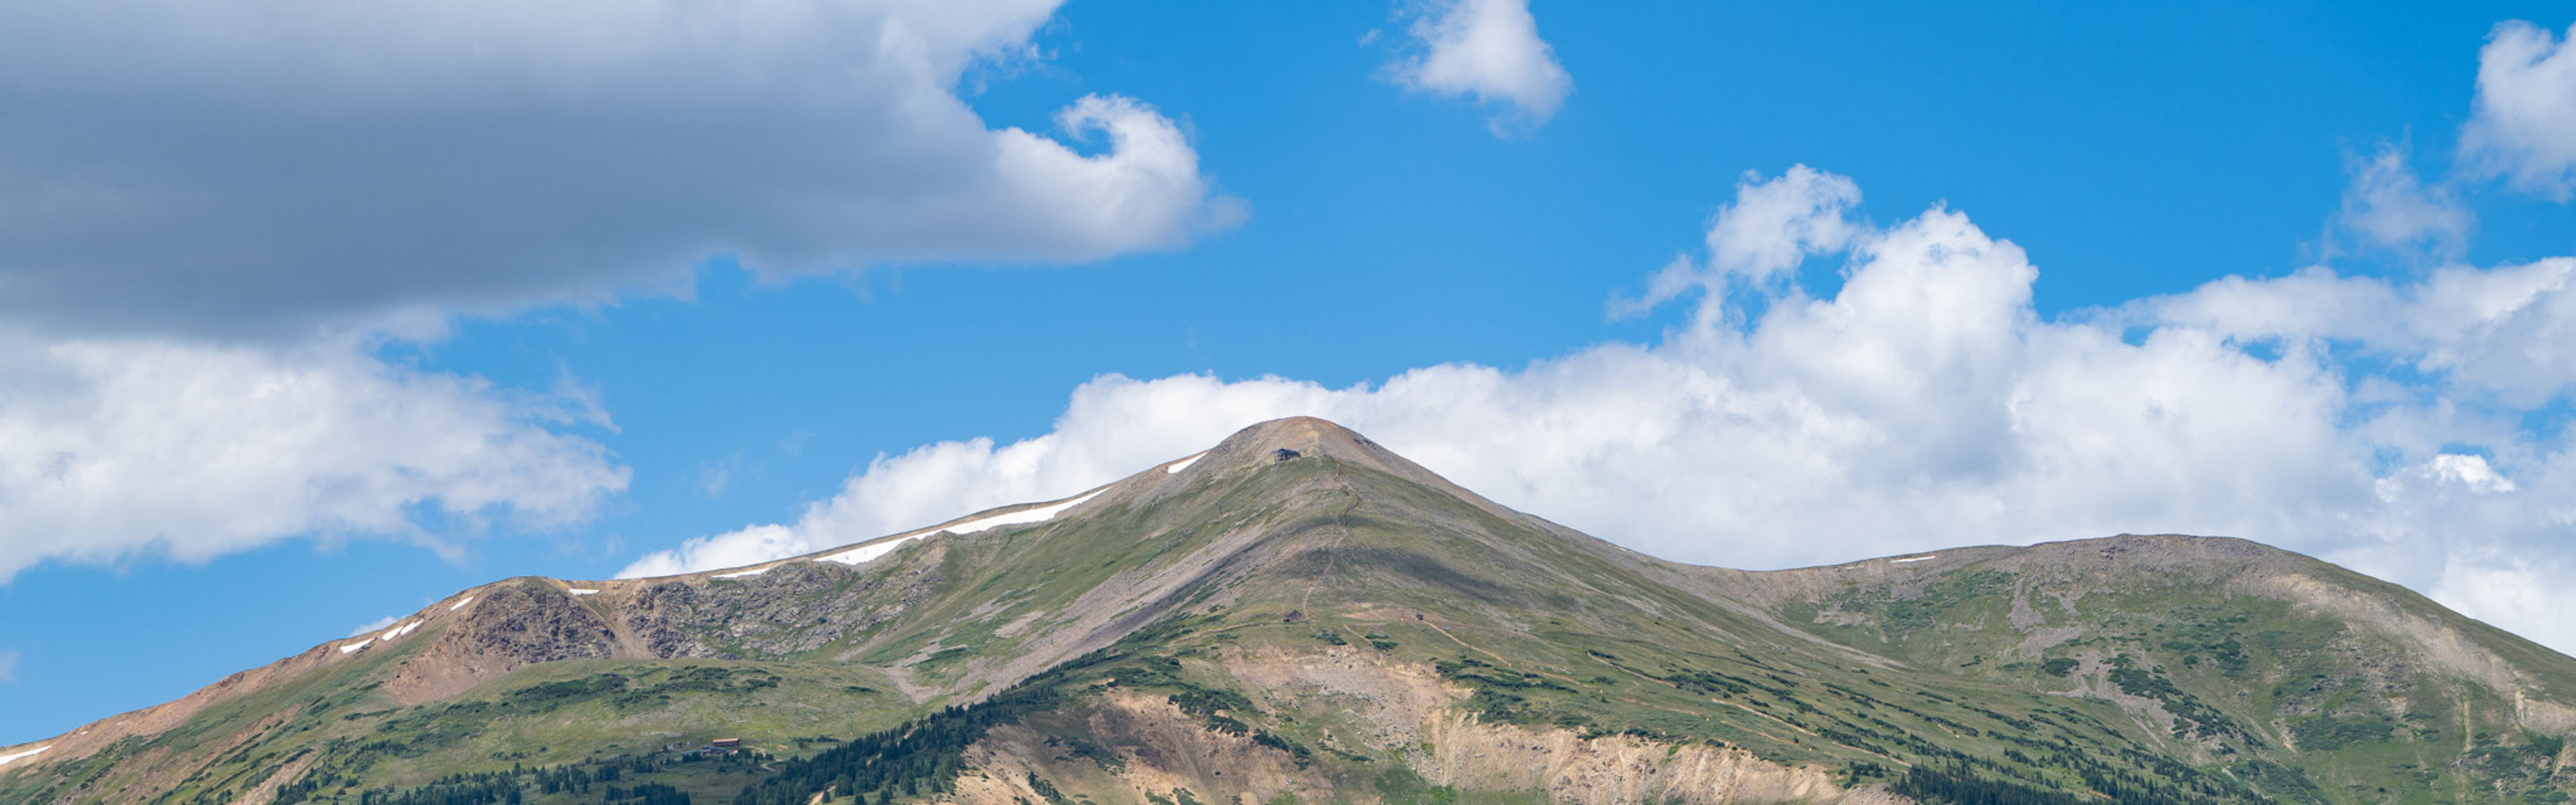 Peak 8 - Boreas Mountain at Breckenridge During Summer